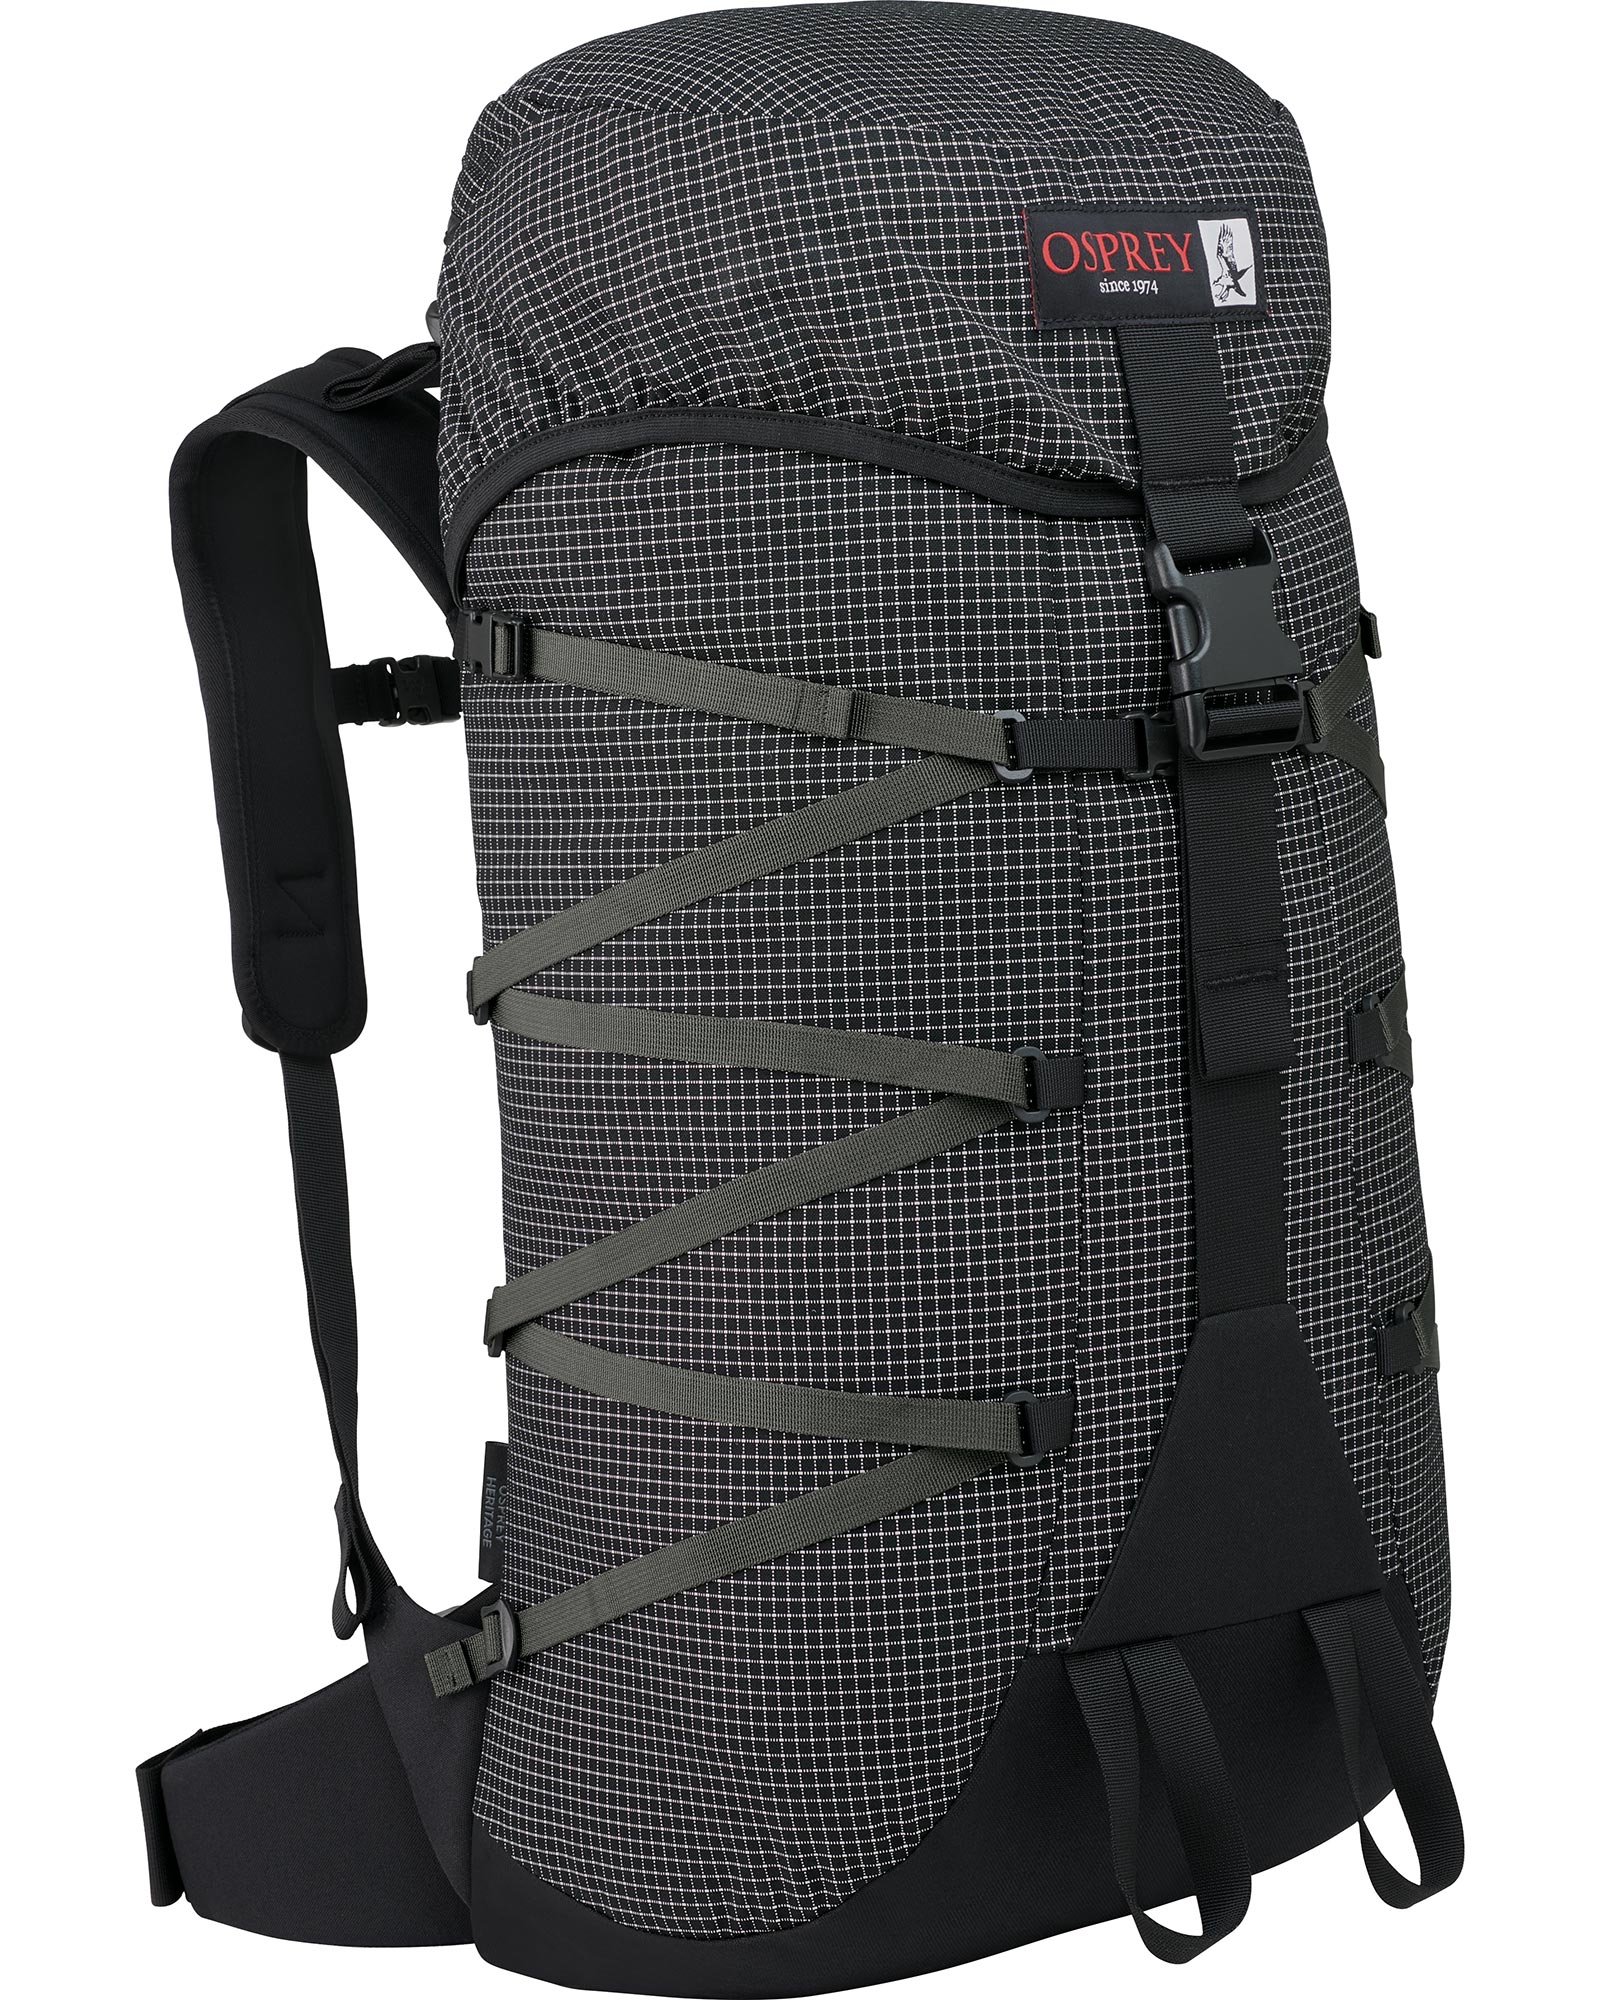 Osprey Aether 30 NanoFly Backpack - Black White Grid